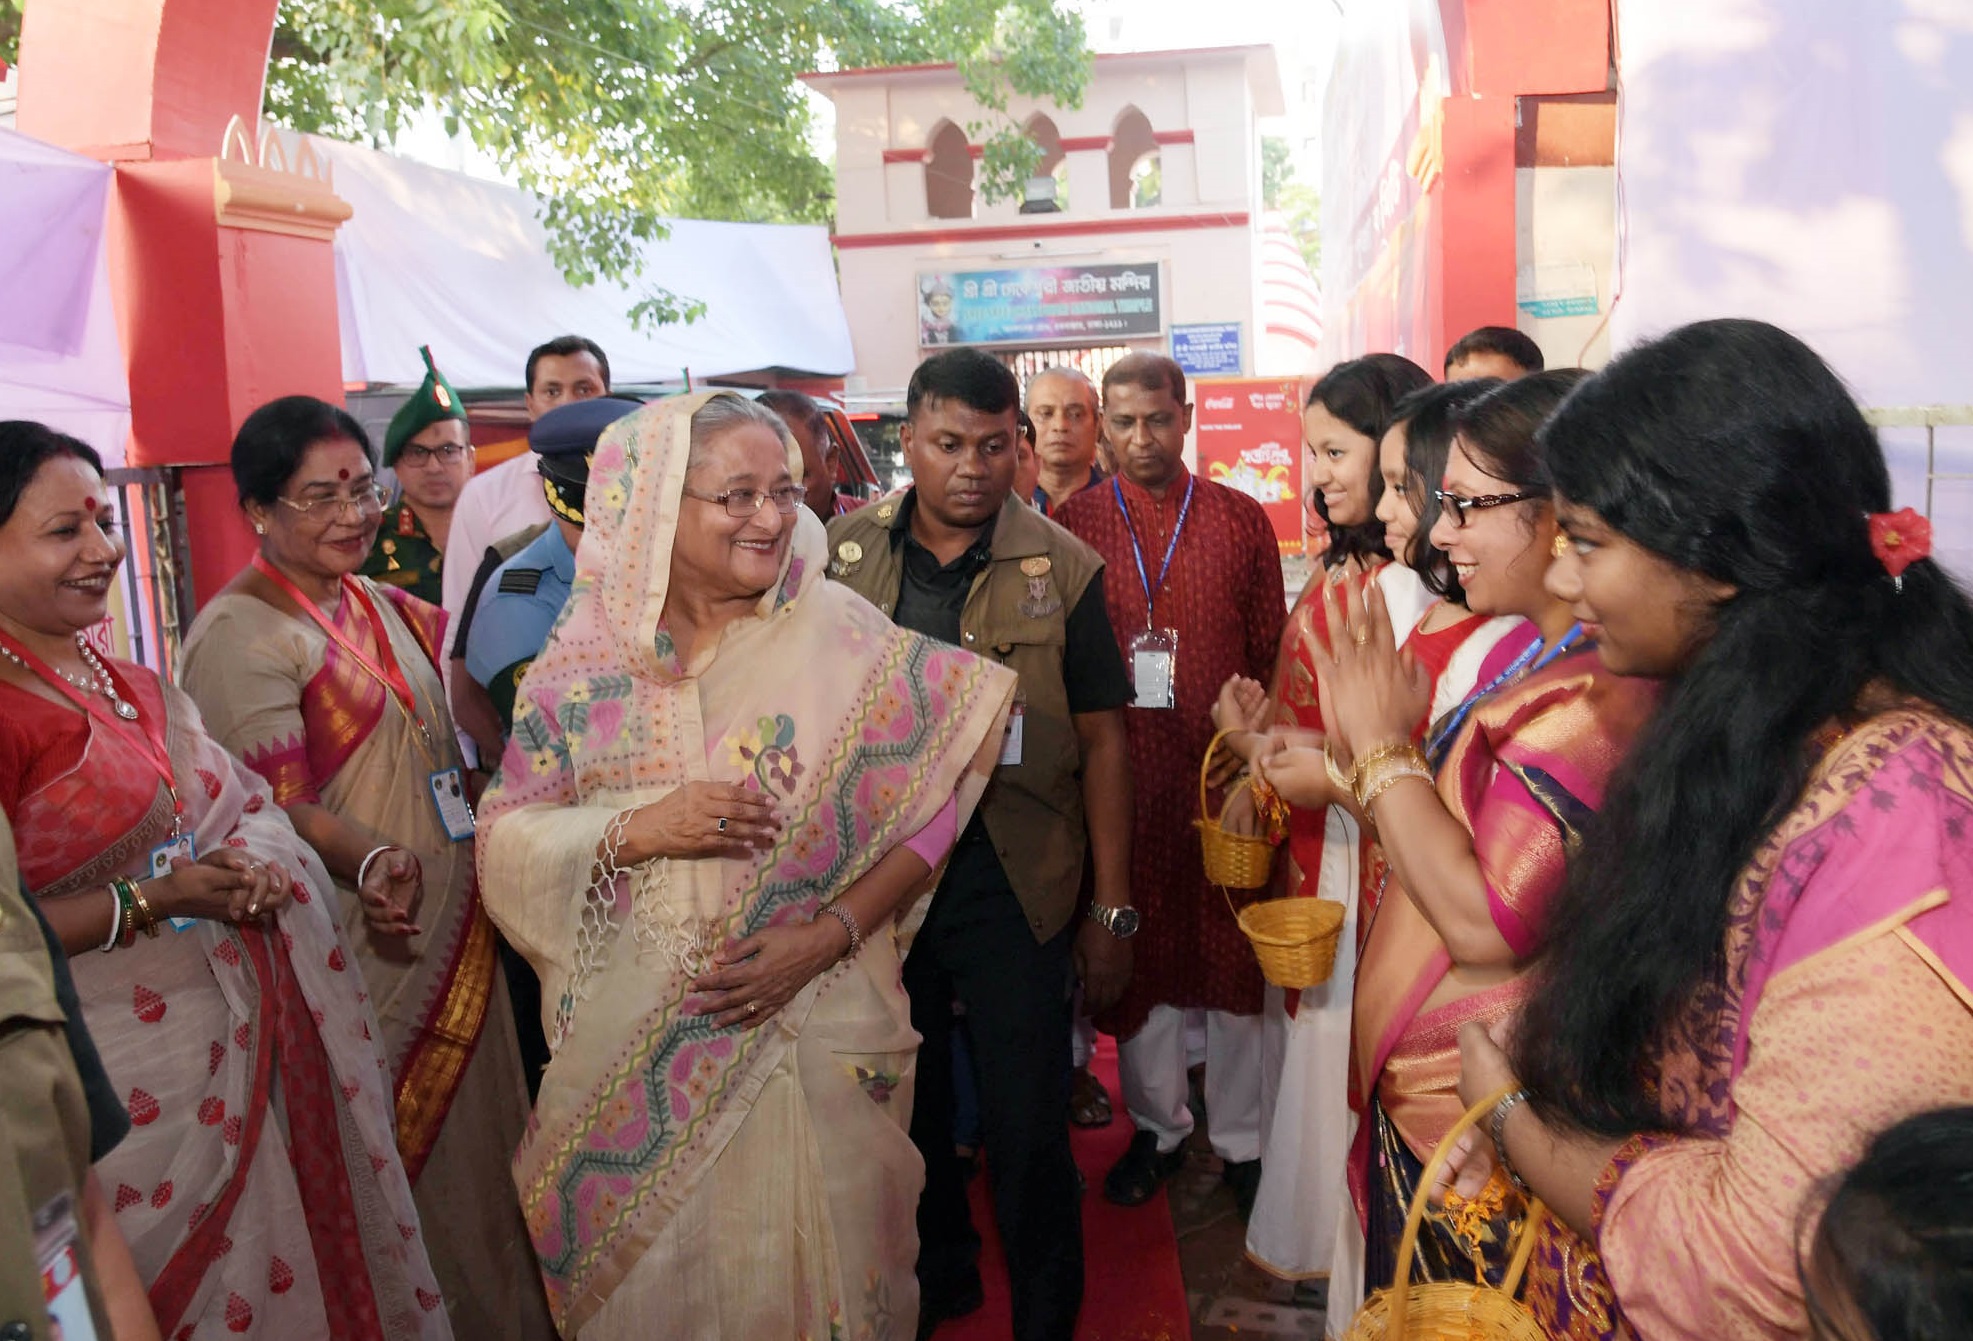 PM thanks Muslim's staying beside Hindu houses